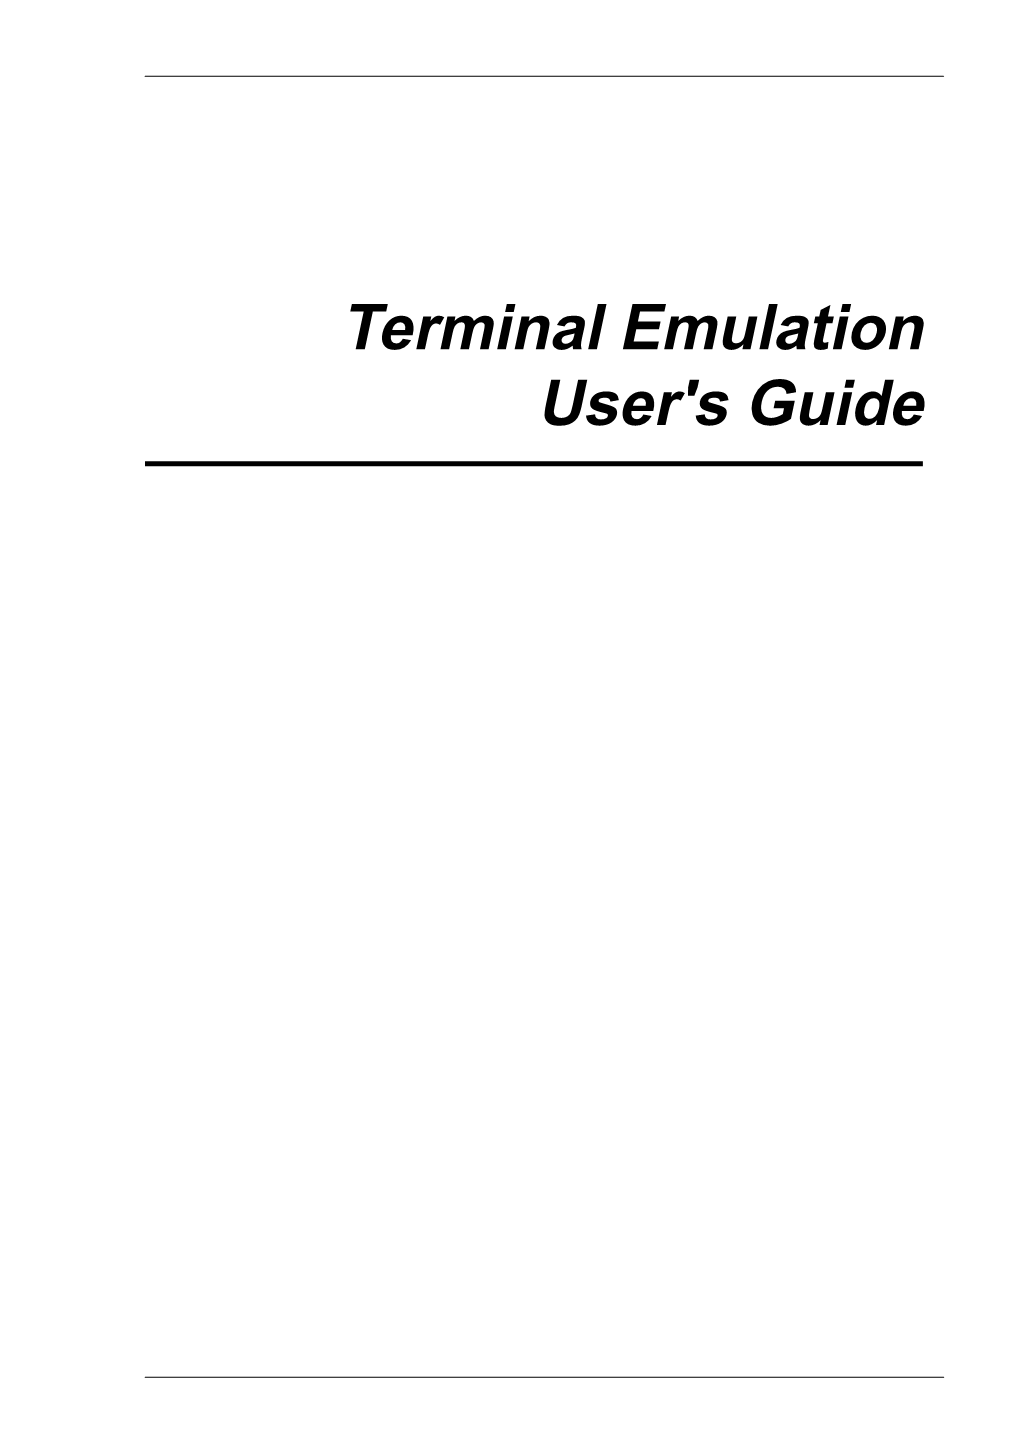 Terminal Emulation User's Guide Trademarks